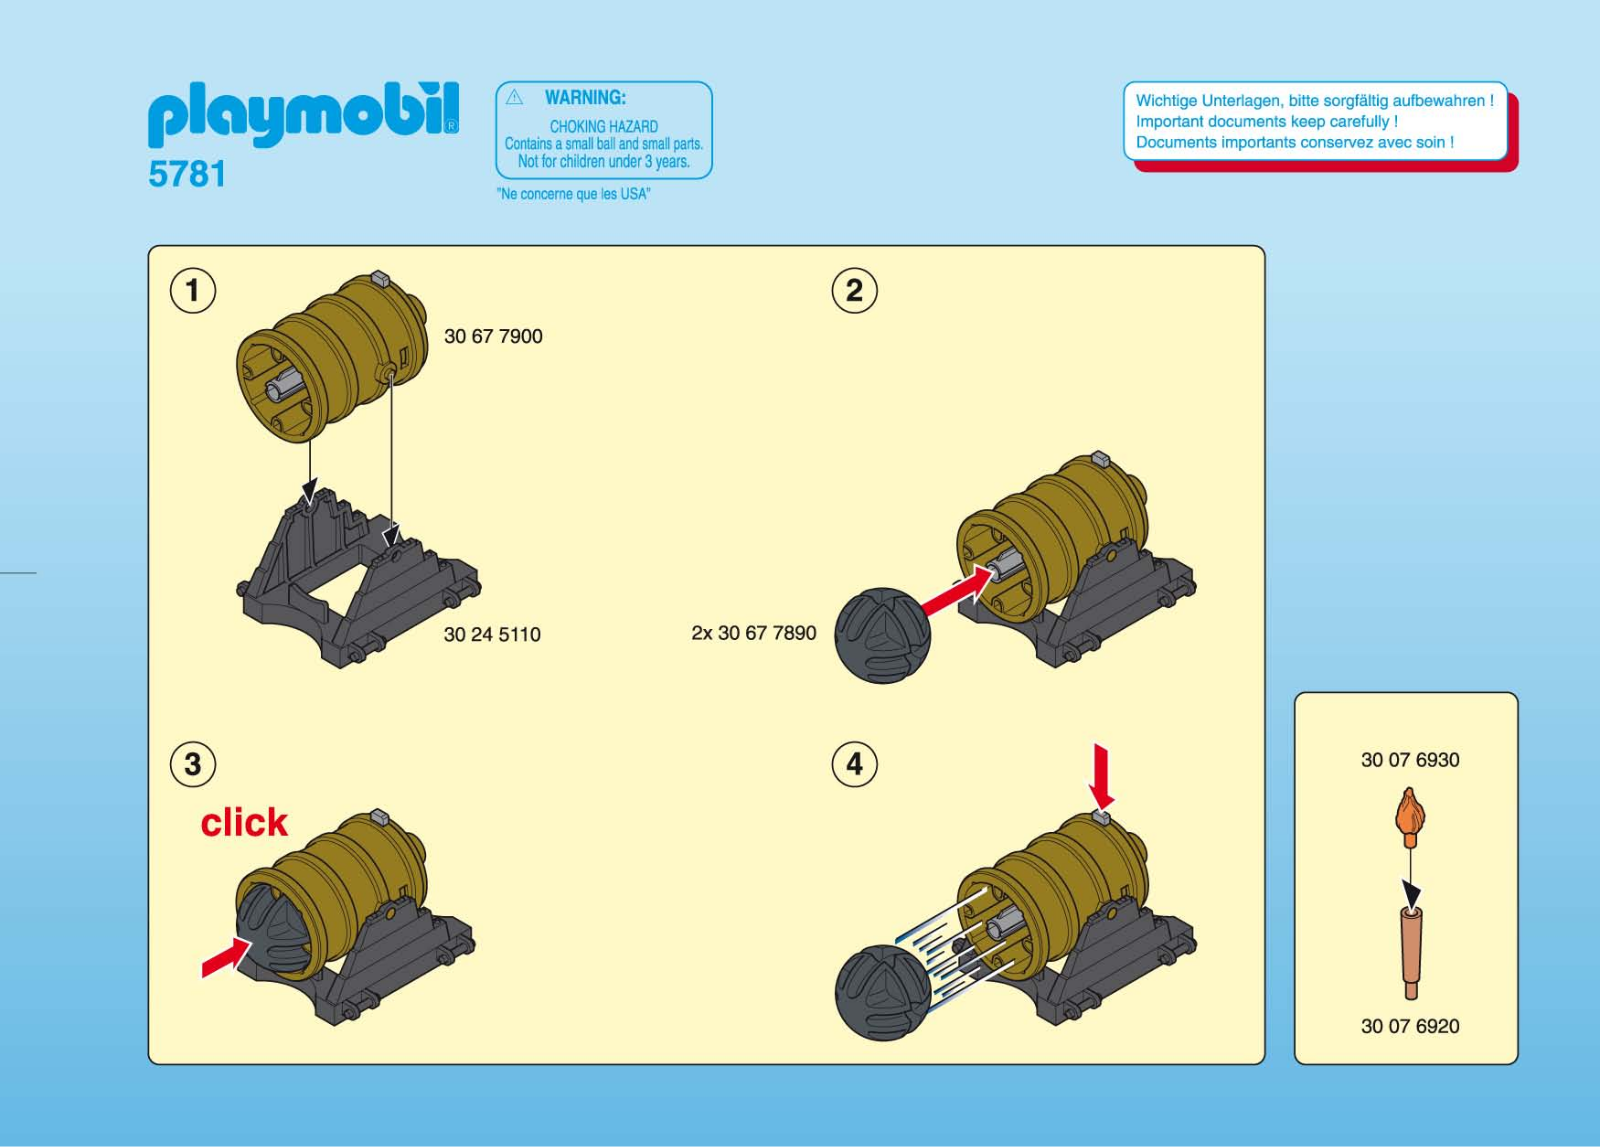 Playmobil 5781 Instructions